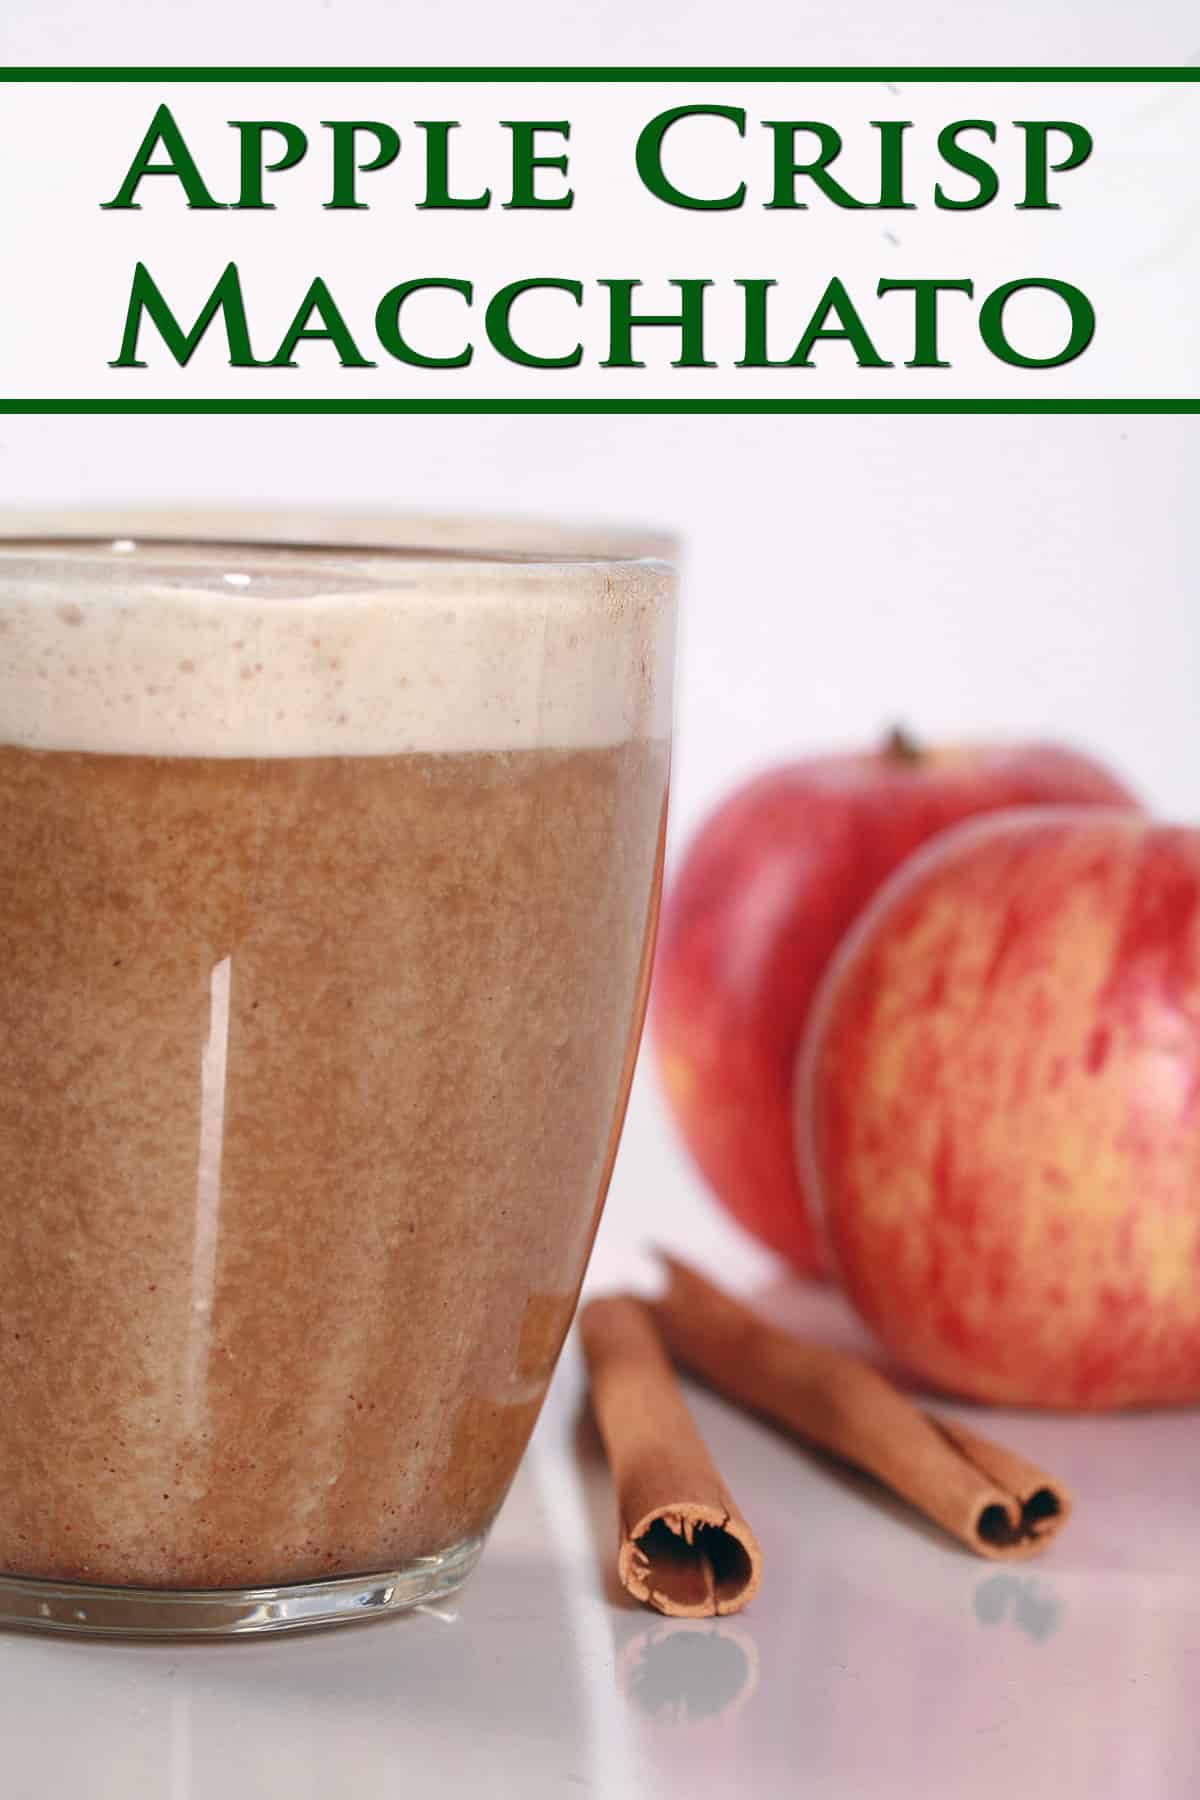 A glass mug of apple crisp macchiato, with cinnamon sticks and apples next to it.